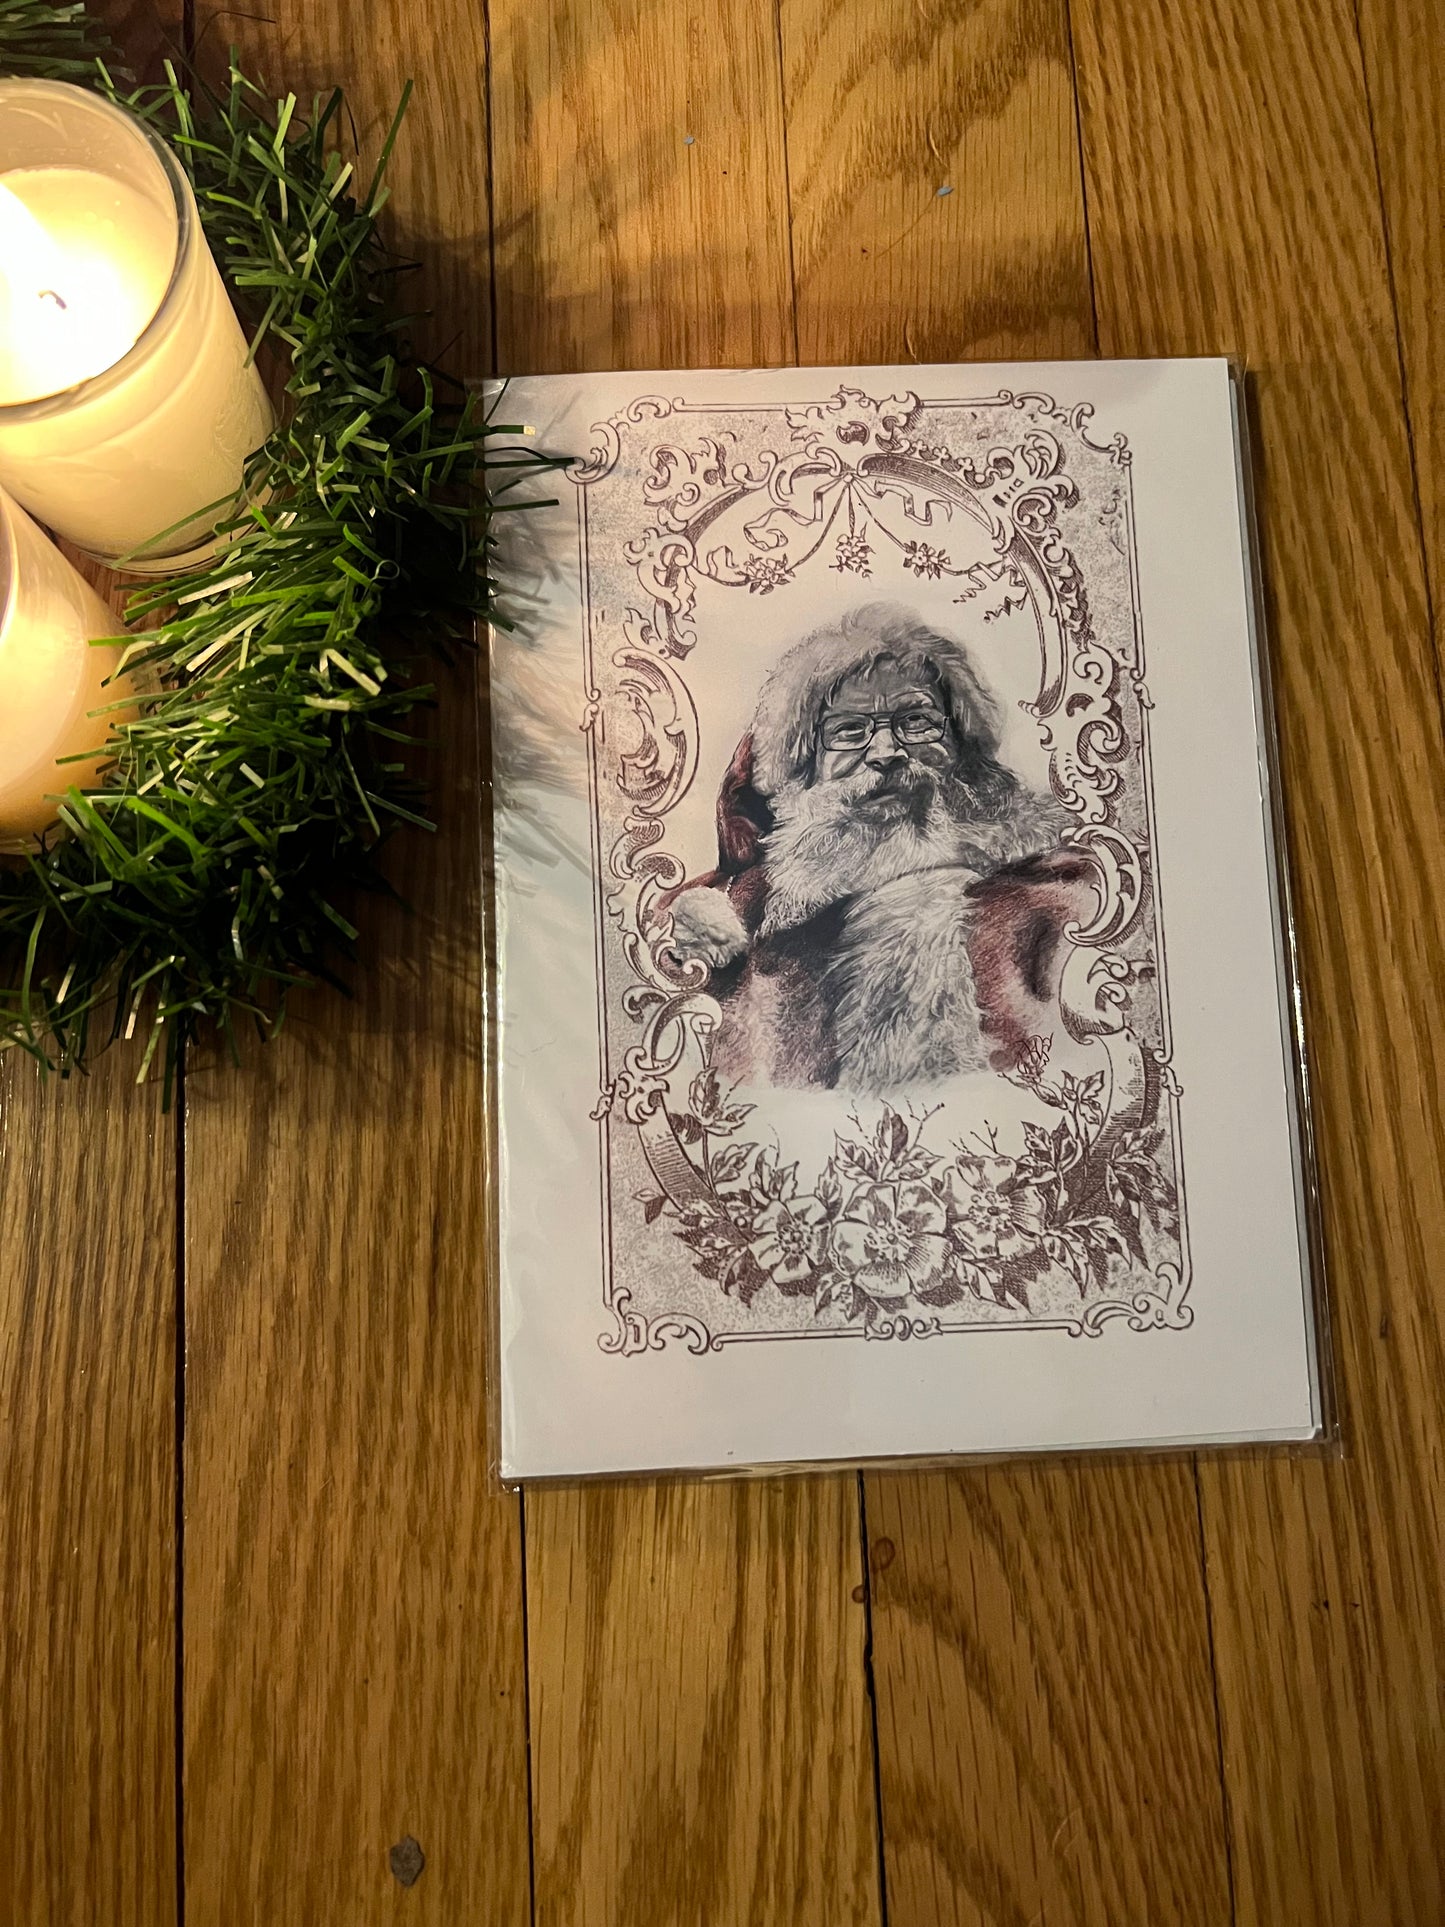 Winter Holiday Art Prints Greeting Cards of Kris Kringle